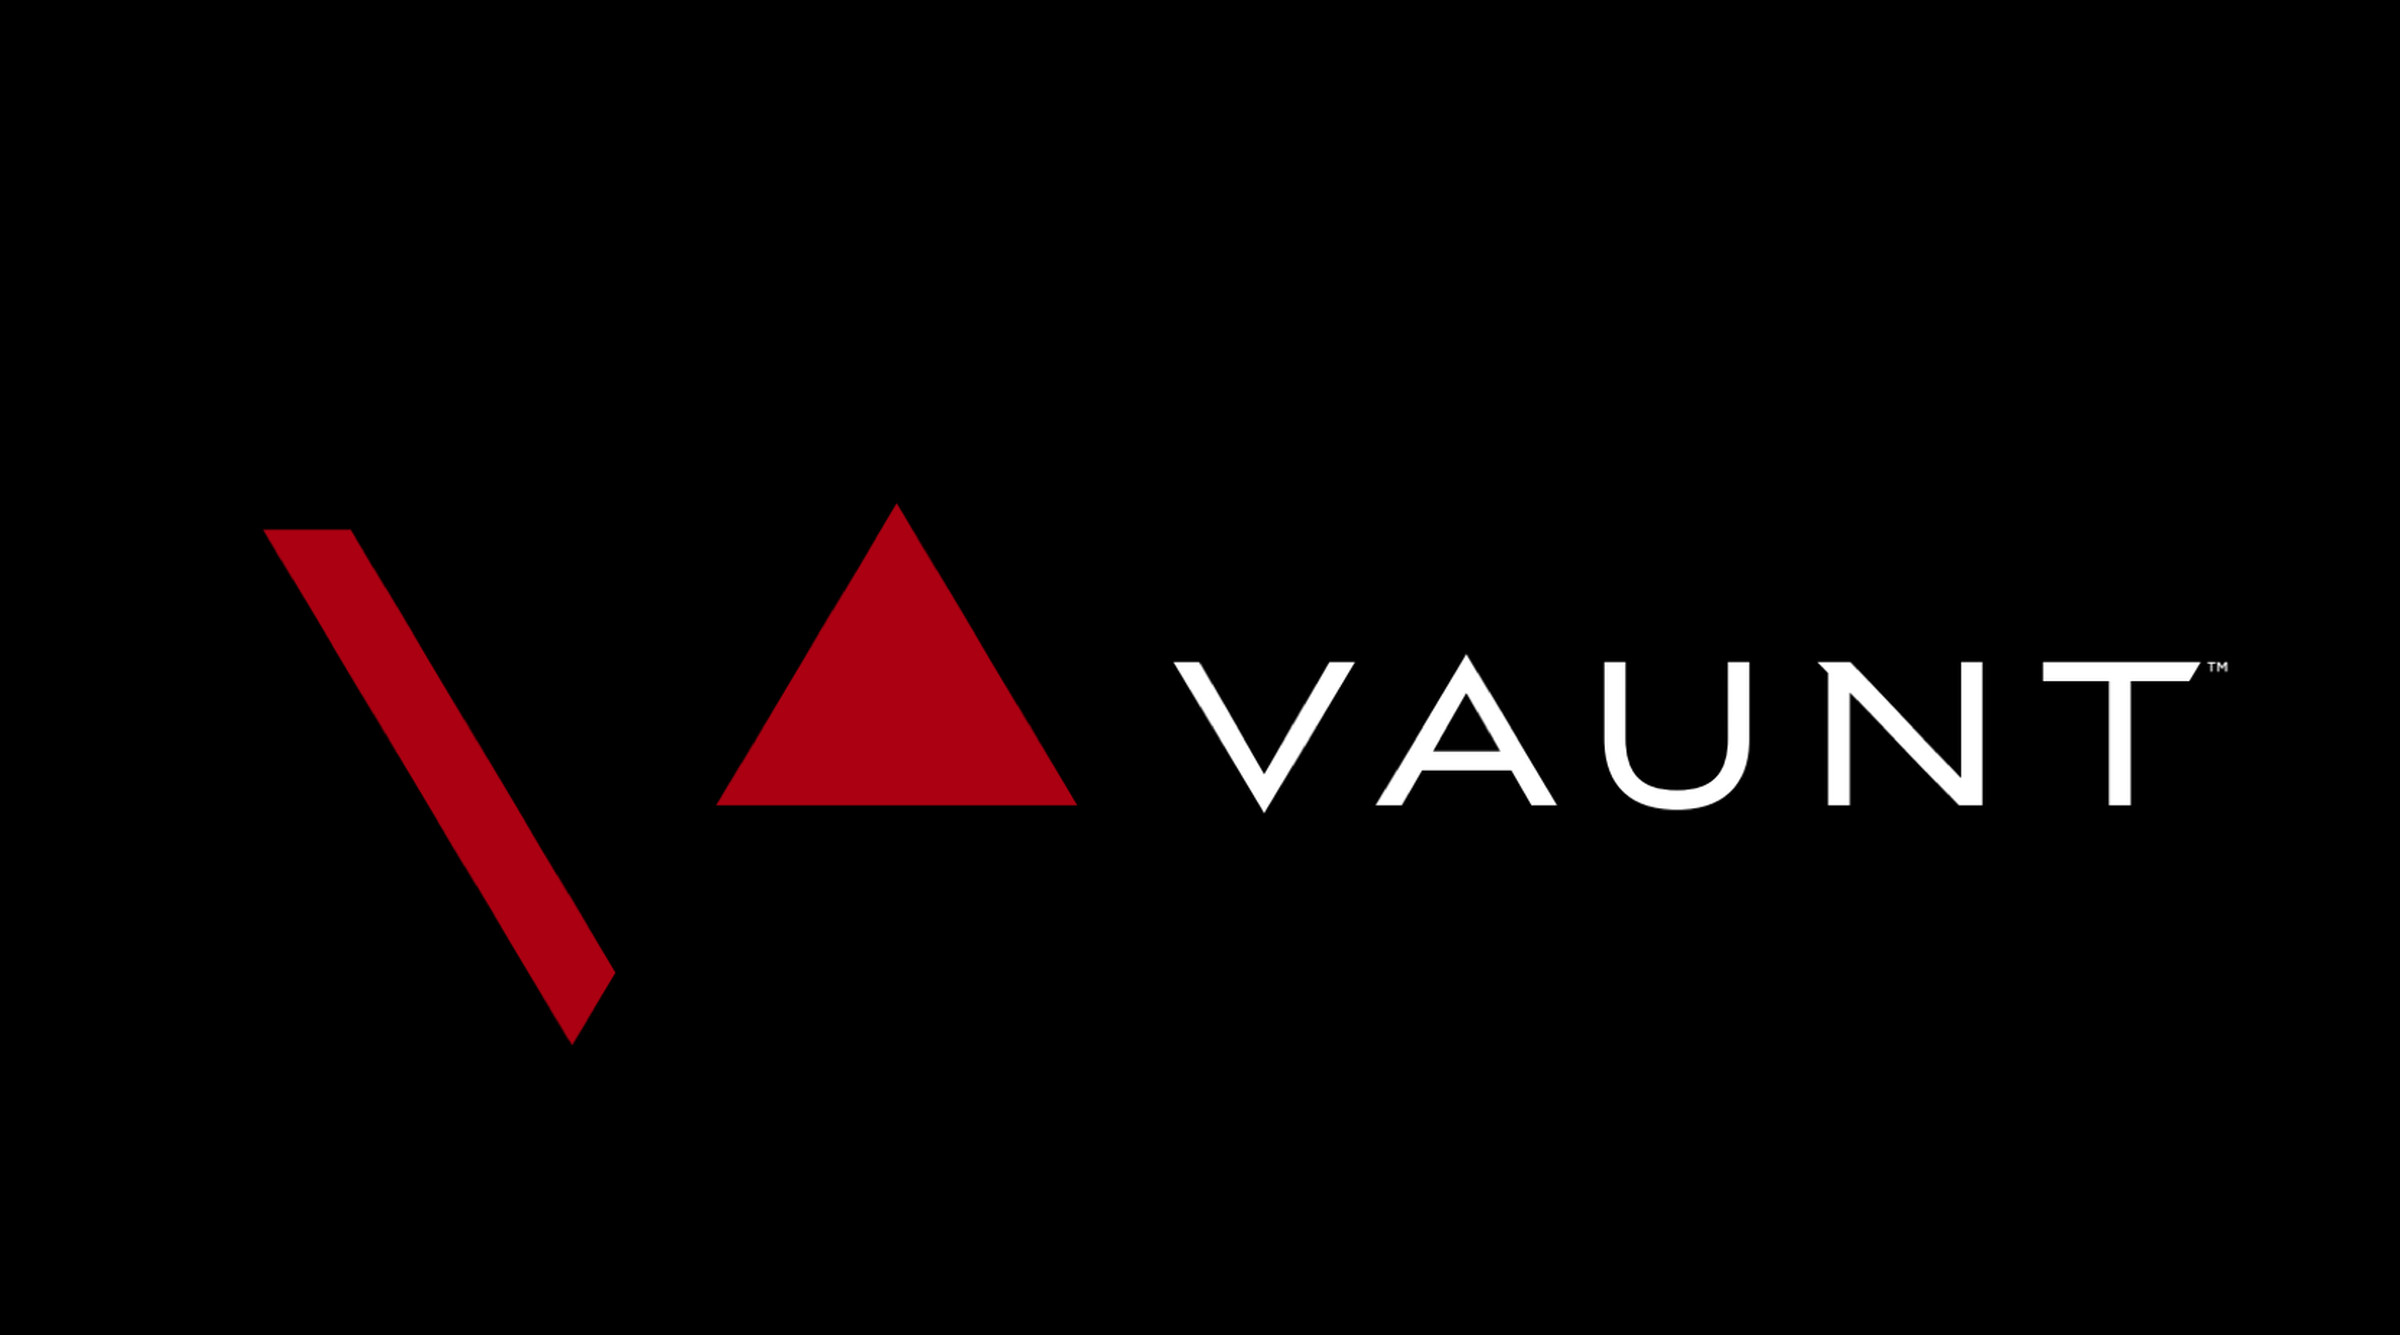 The Vaunt logo.